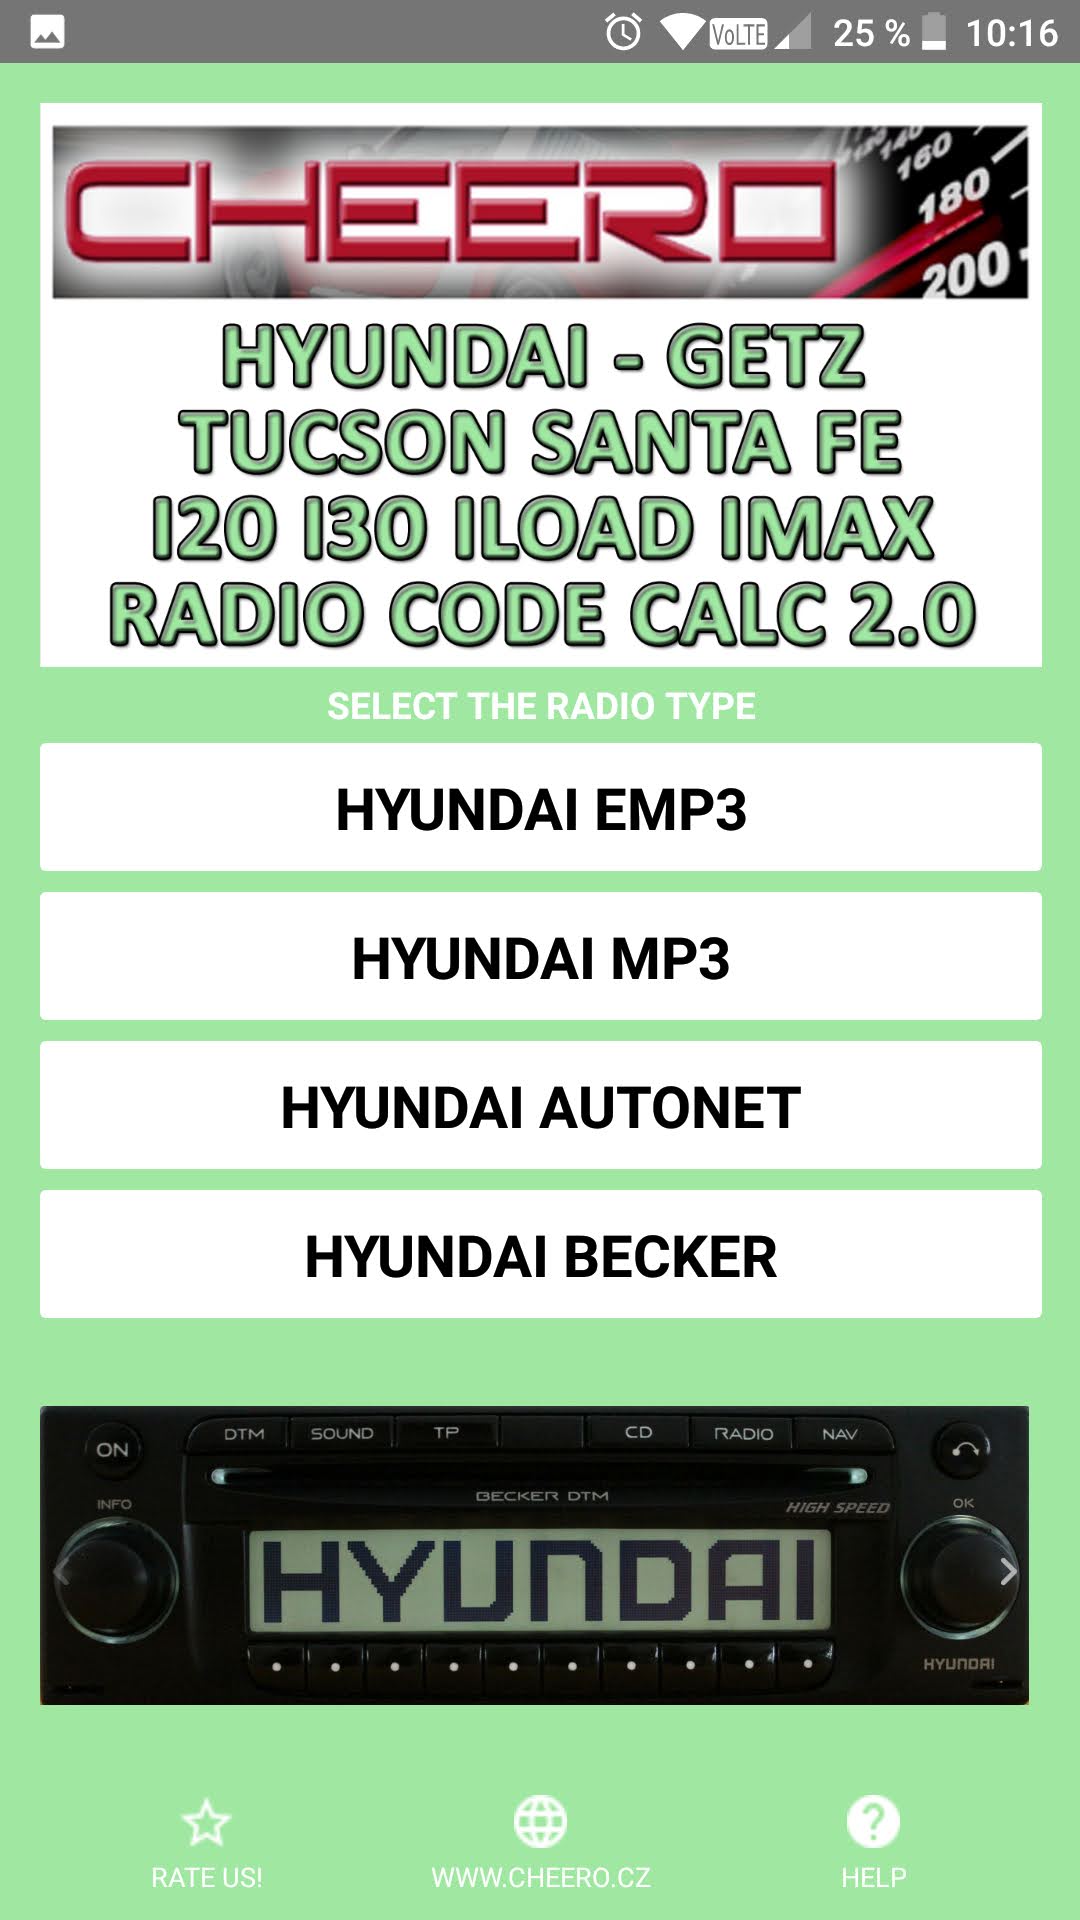 RADIO CODE FOR HYUNDAI GETZ TUCSON SANTAFE I20 I30 ILOAD IMAX